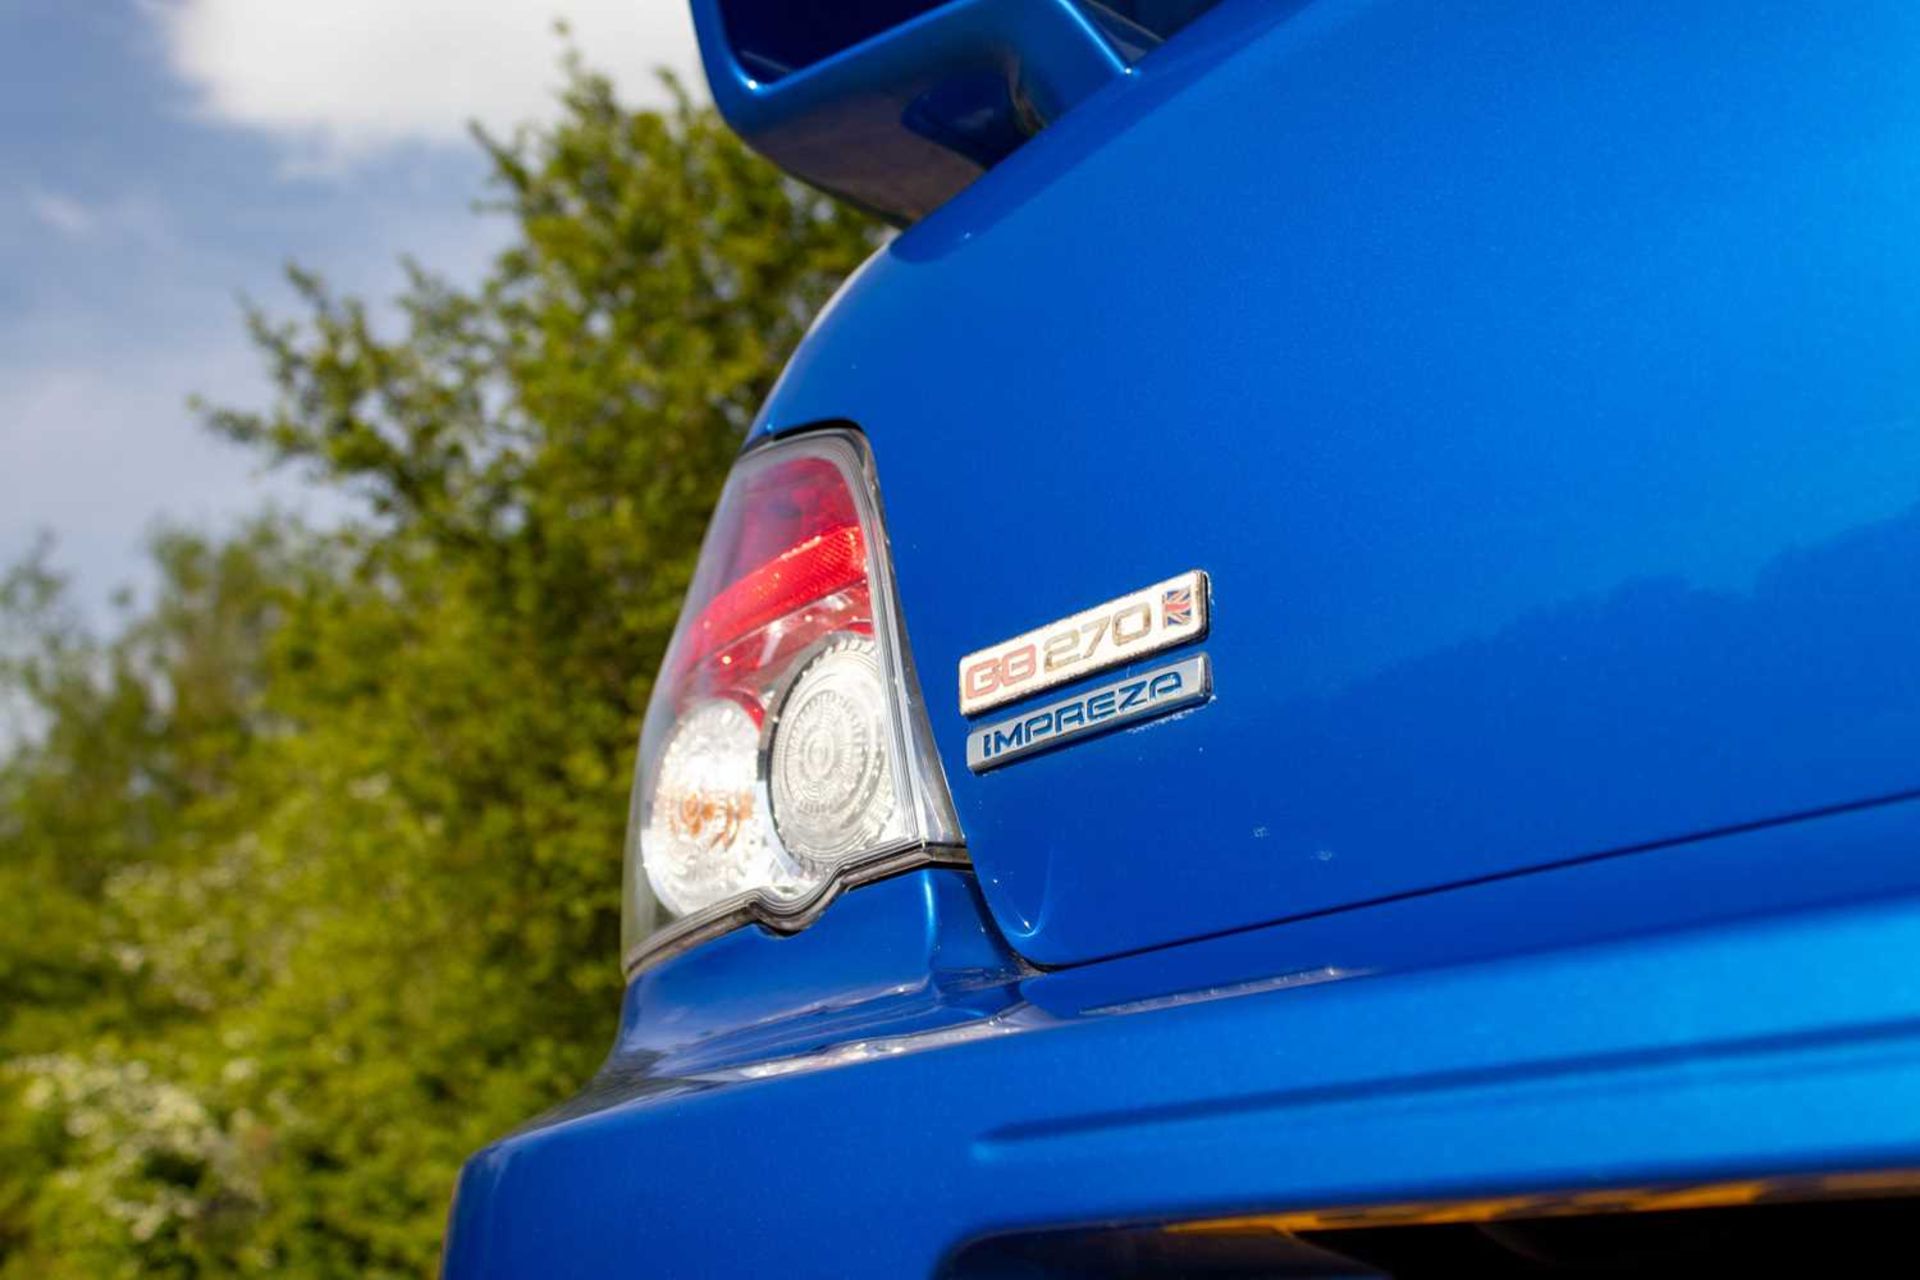 2007 Subaru Impreza GB270 - Image 23 of 86